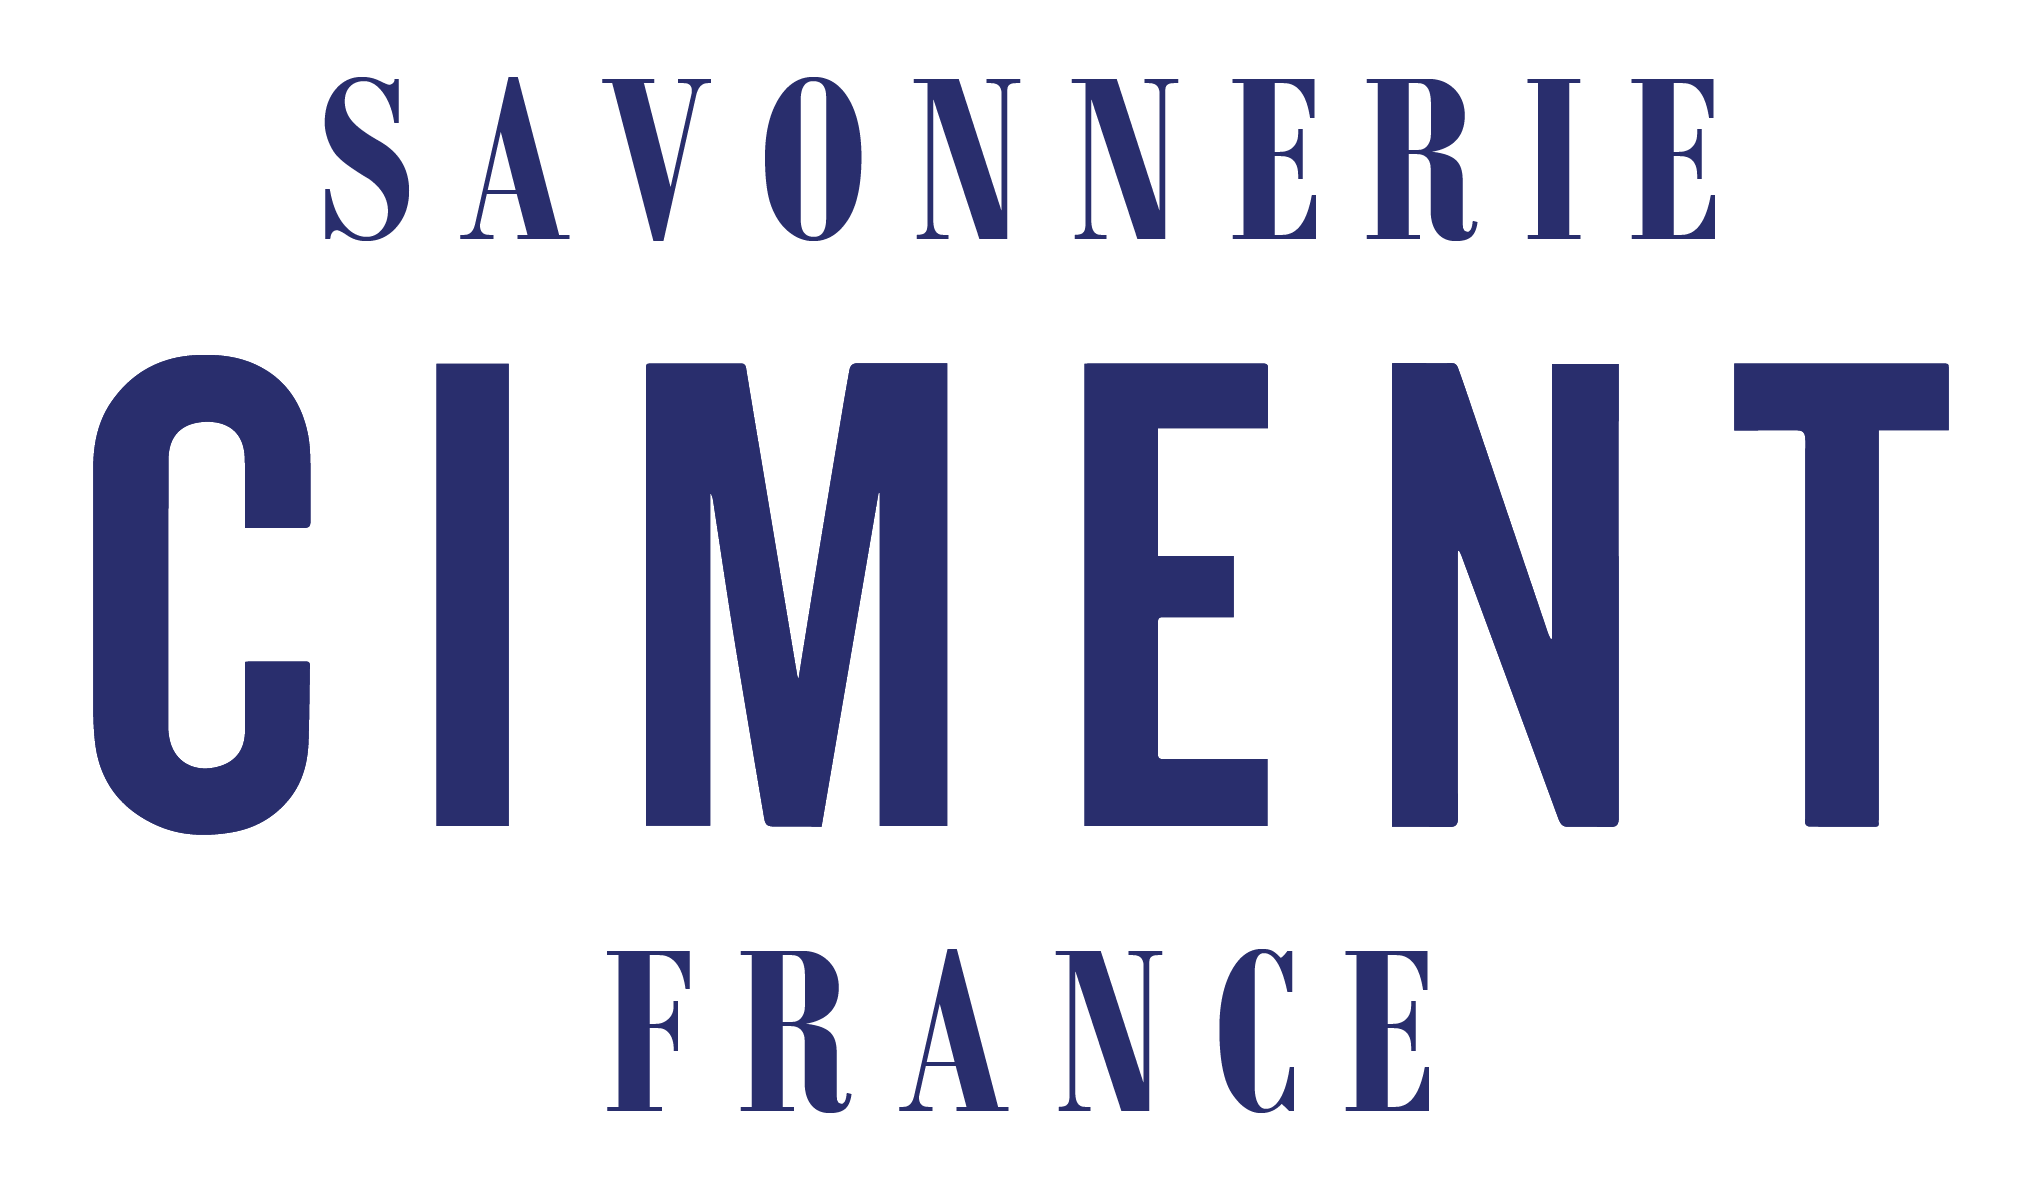 Savonnerie Ciment France